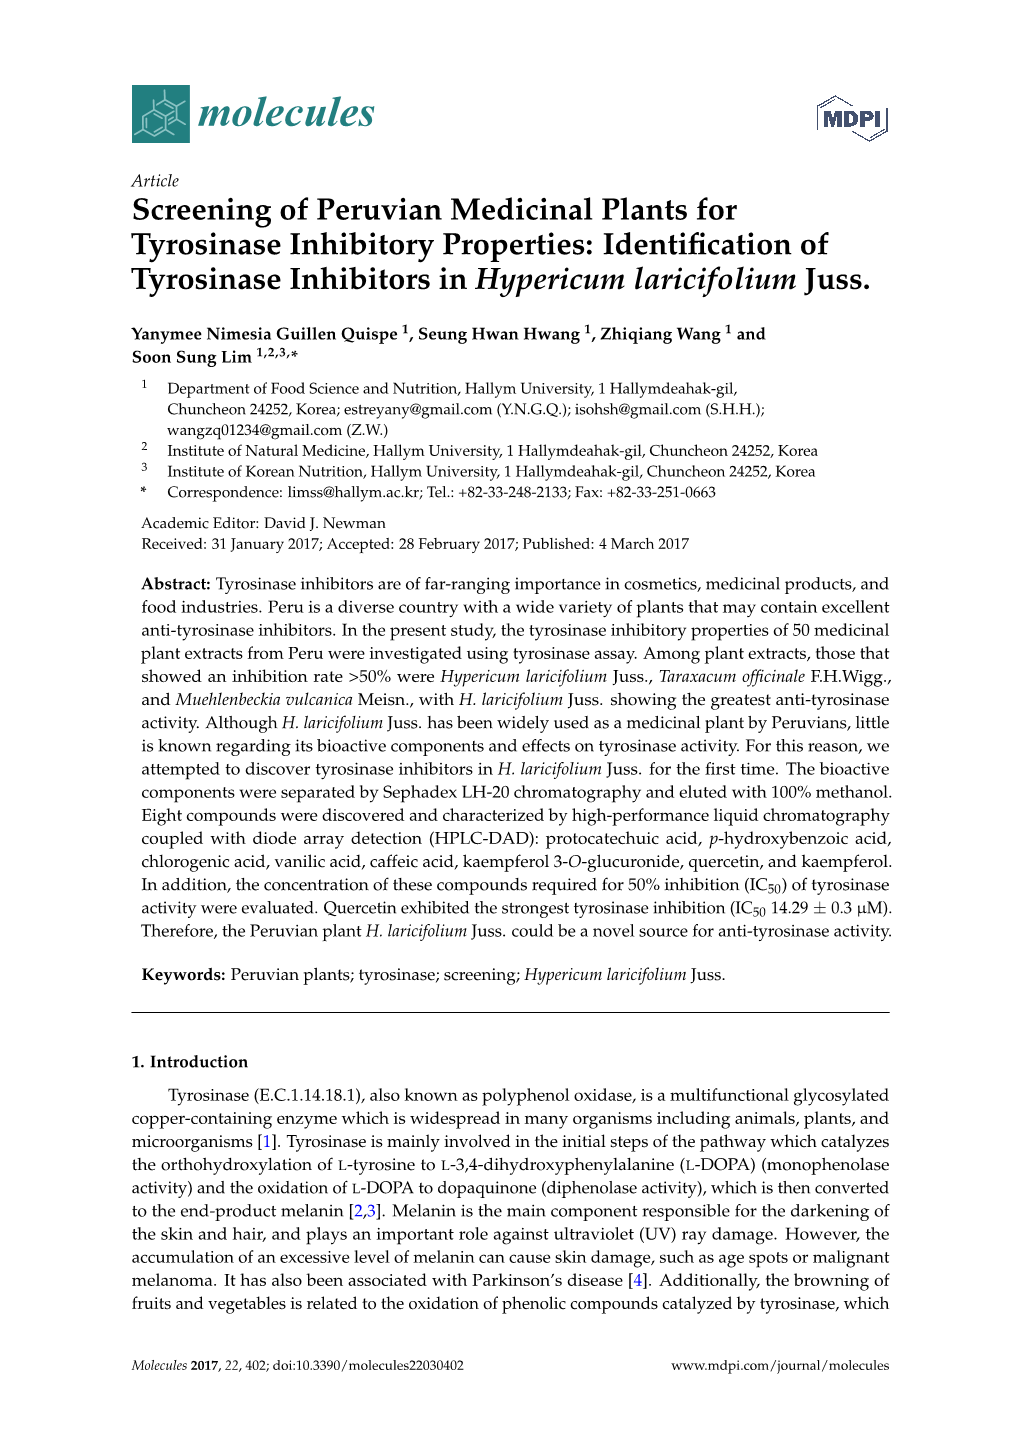 Screening of Peruvian Medicinal Plants for Tyrosinase Inhibitory Properties: Identiﬁcation of Tyrosinase Inhibitors in Hypericum Laricifolium Juss